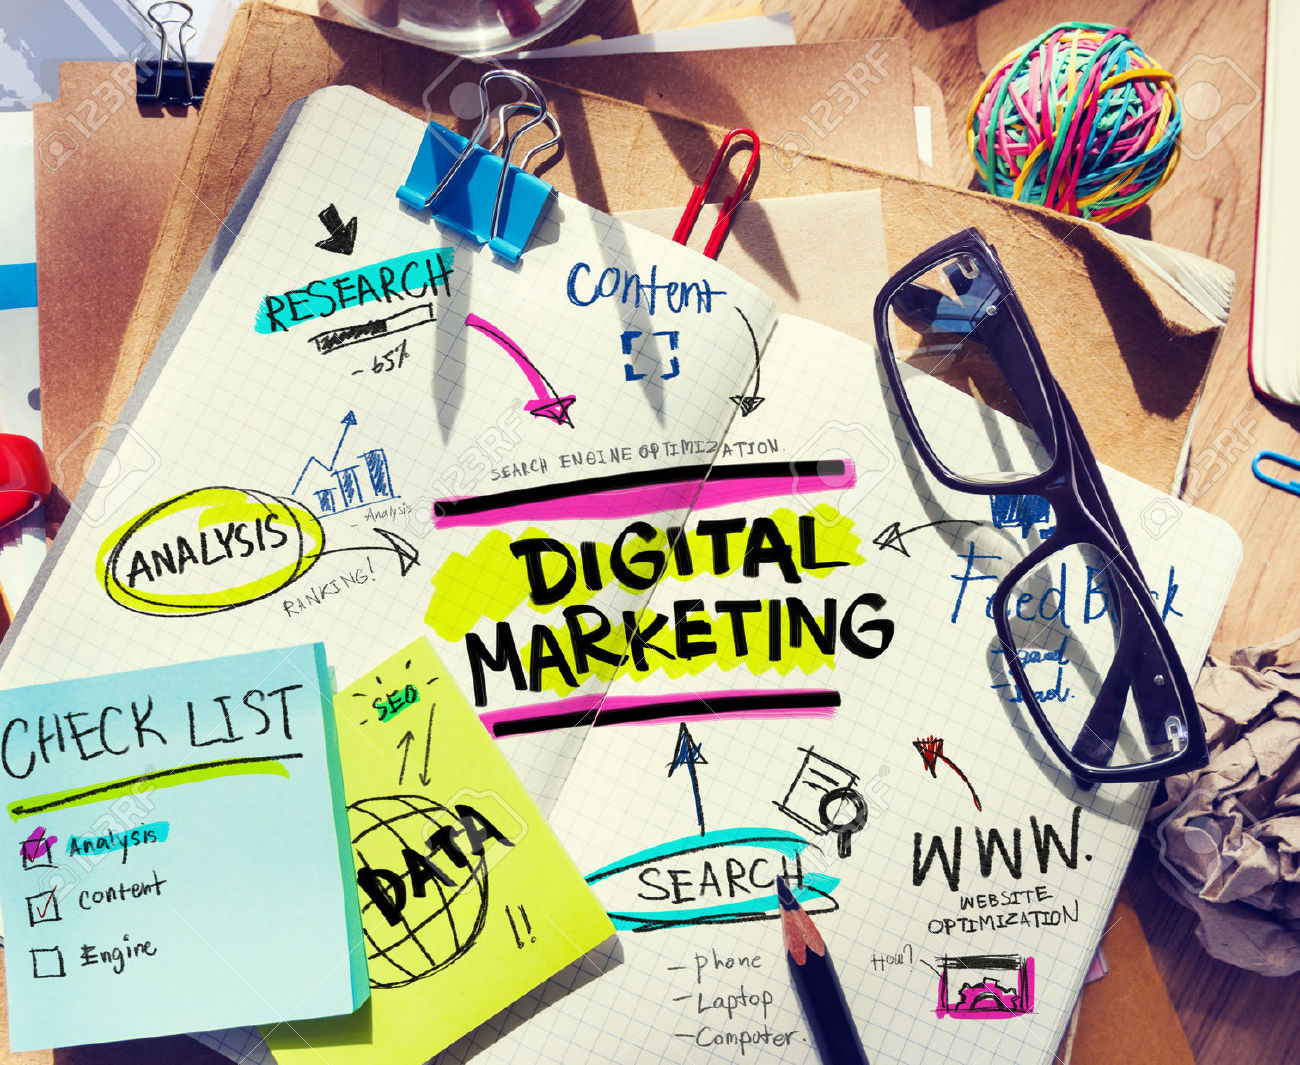 Digital Marketing Checklist For Small Businesses